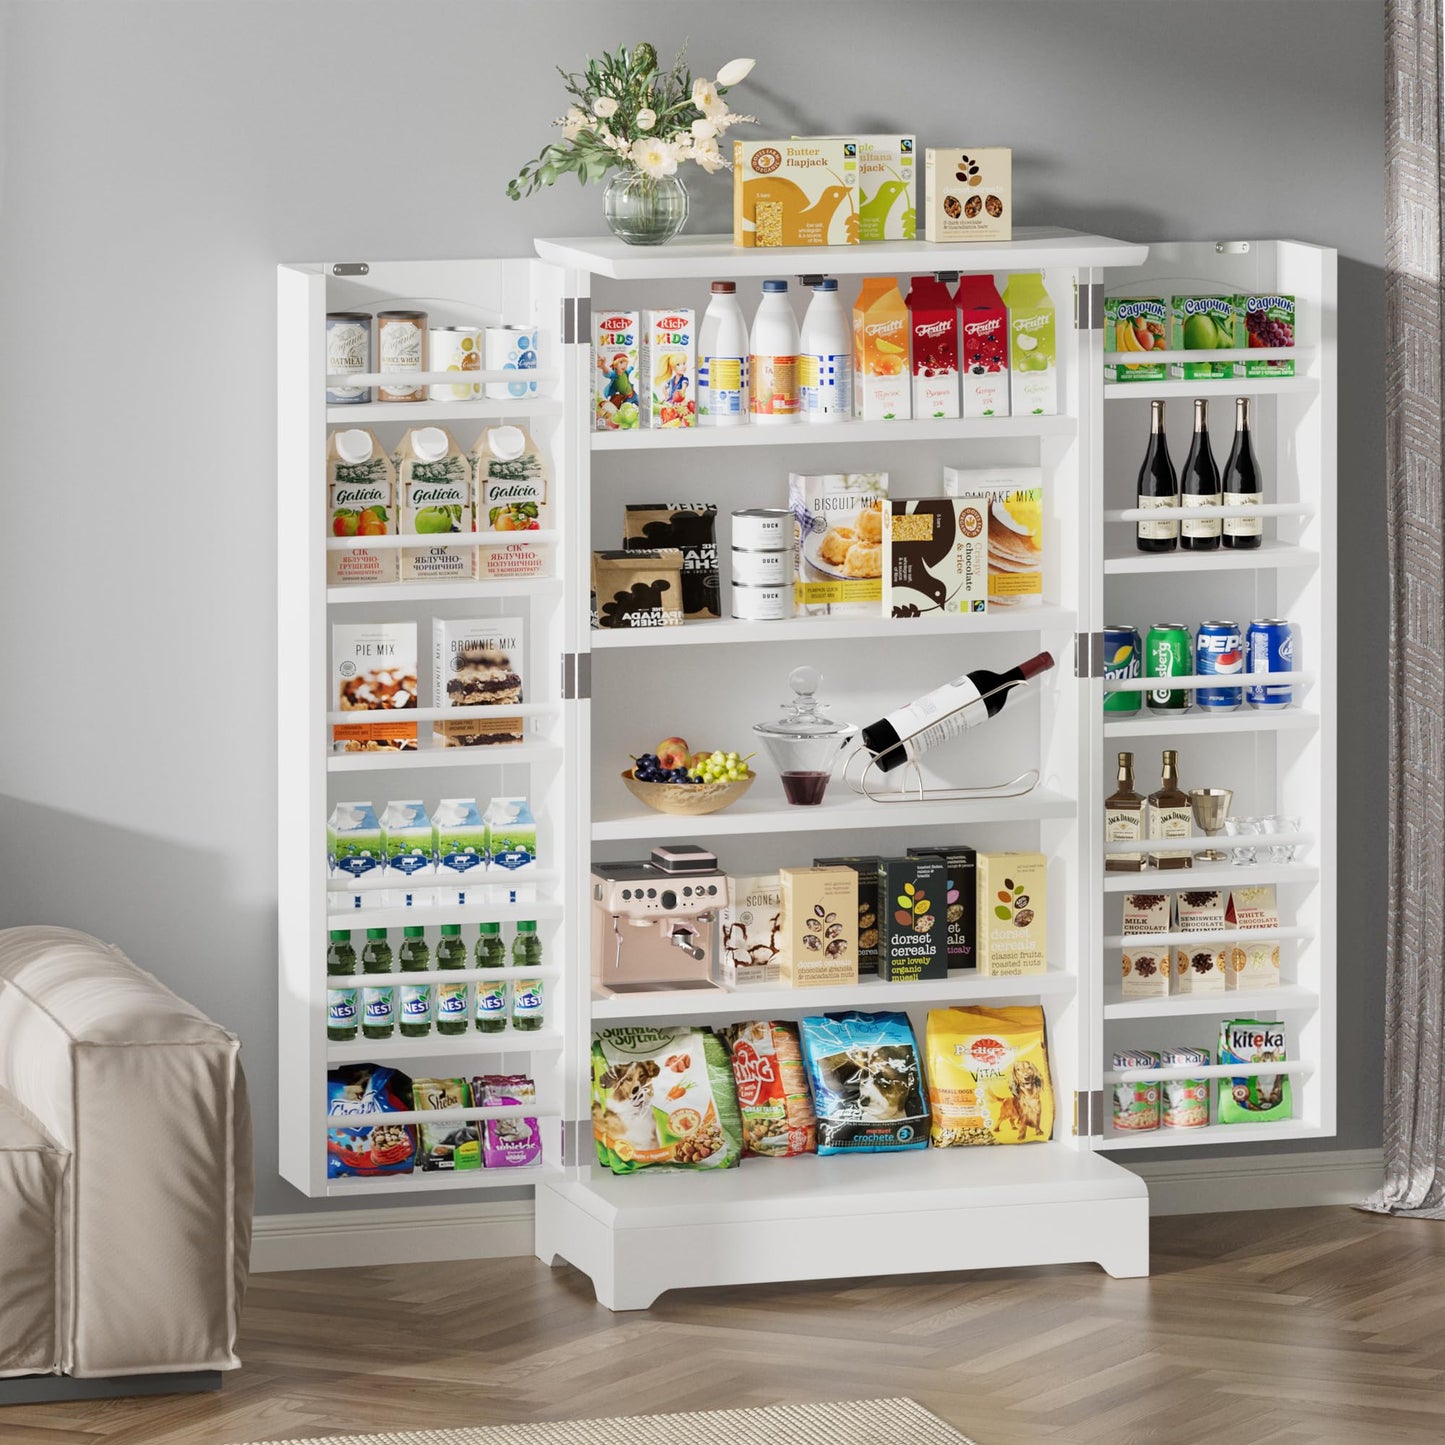 YESHOMY 41" Kitchen Pantry Storage Cabinet, White, Adjustable Shelves, Elegant Design